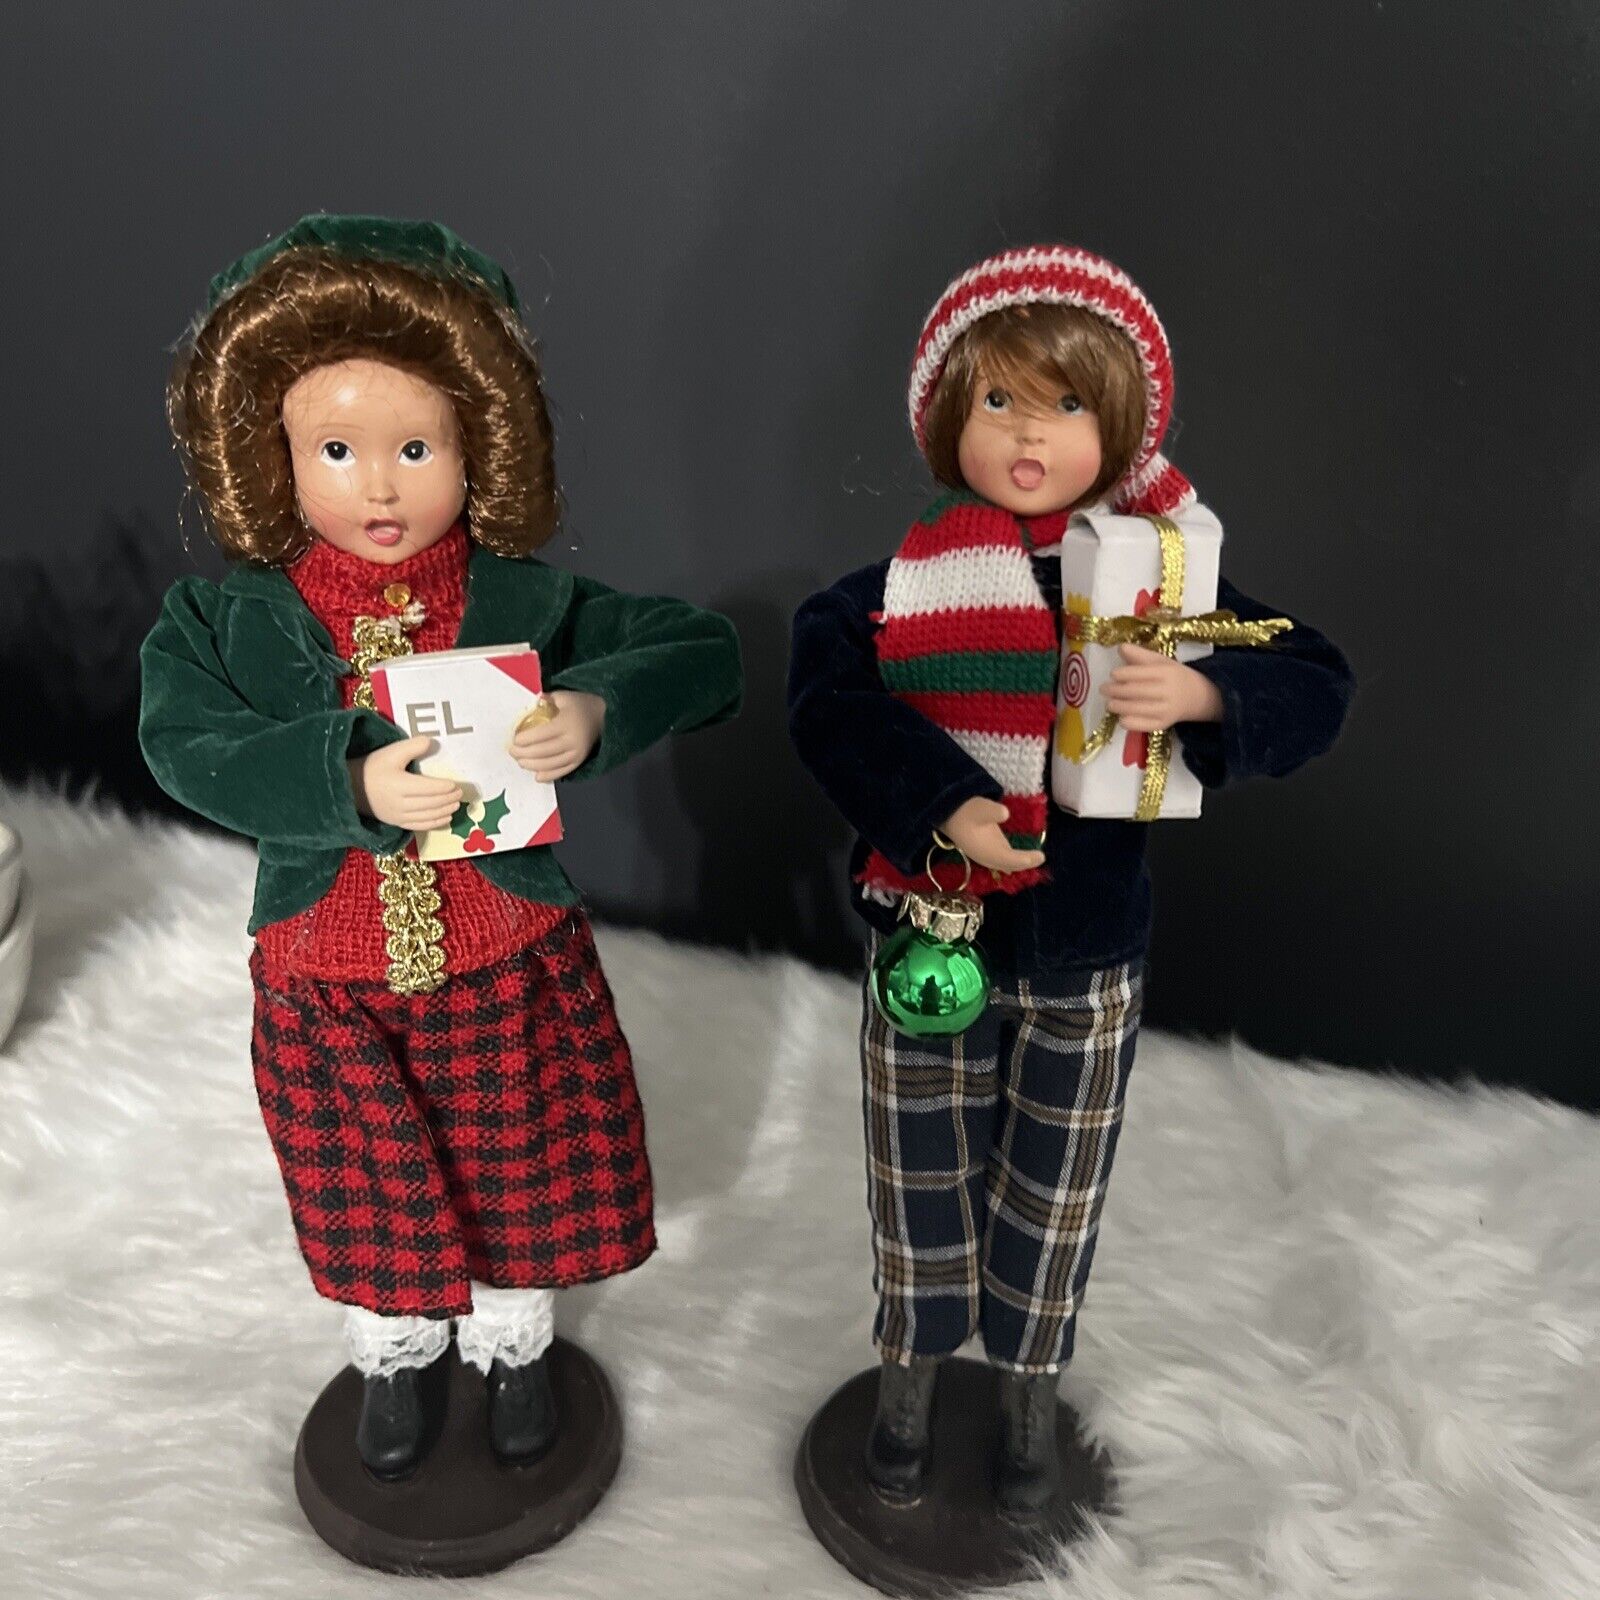 Vintage Pair of Boy and Girl Christmas Caroler Figurines Holiday Decoration EUC